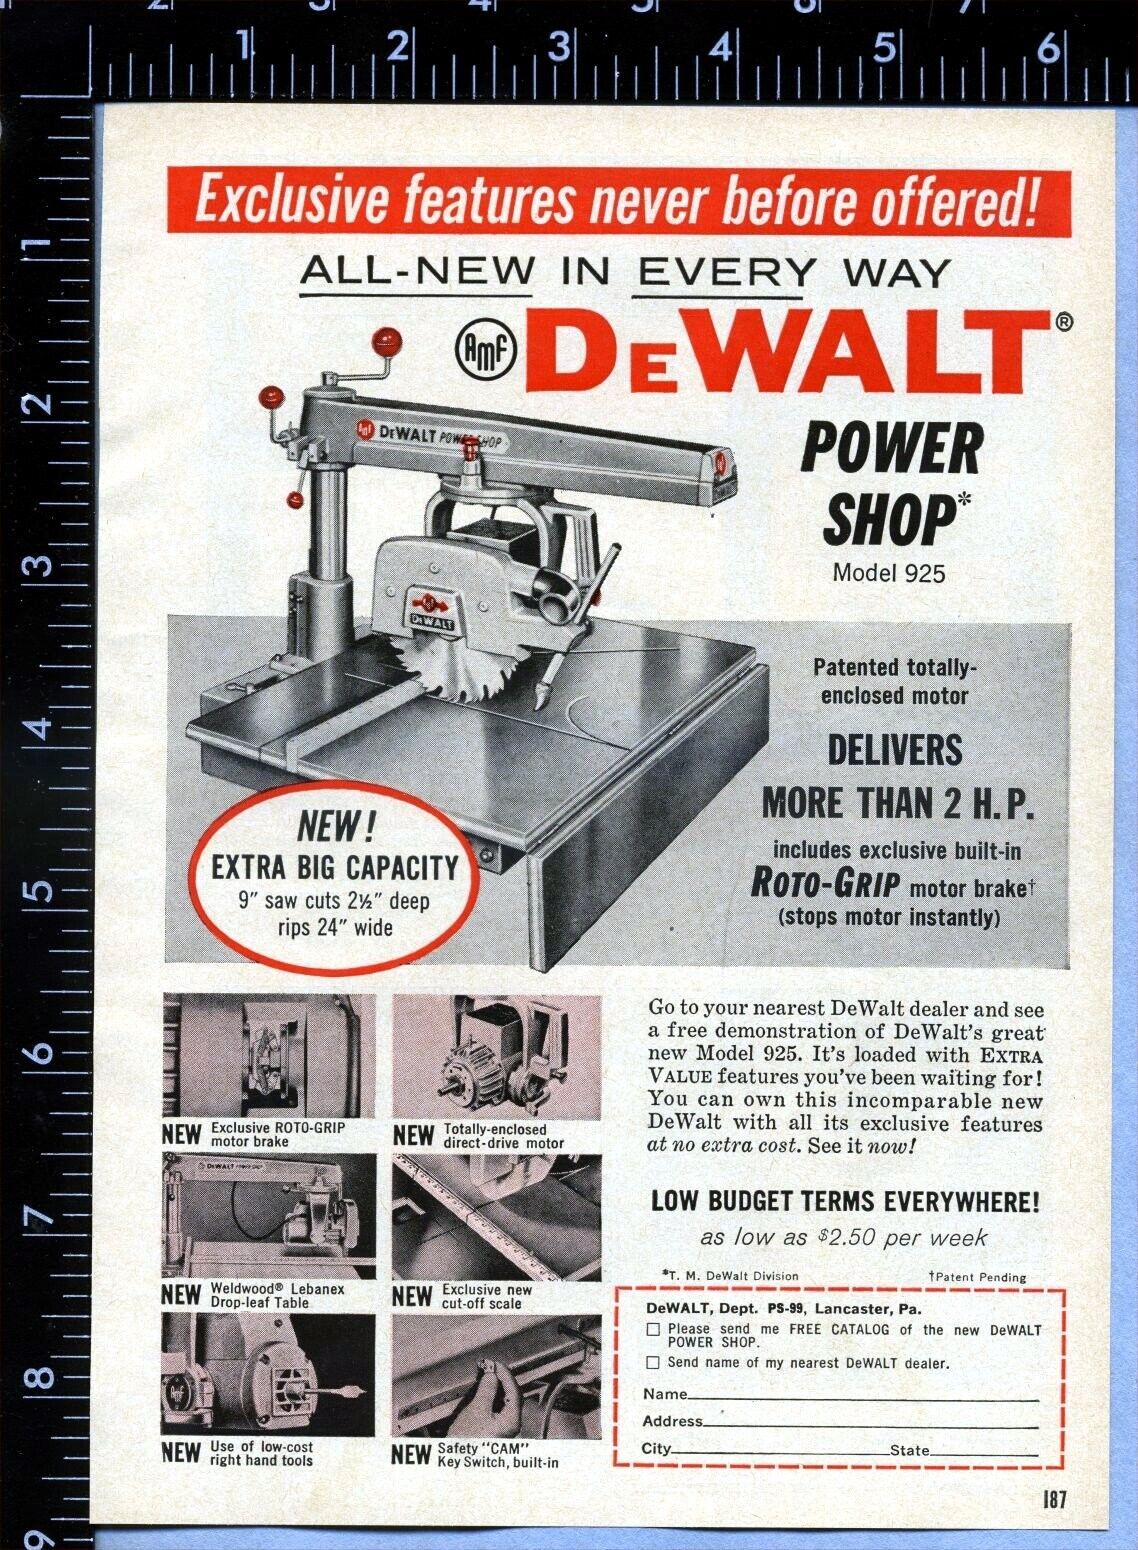 1959 Vintage Magazine Page Ad DeWalt Power Shop Model 925